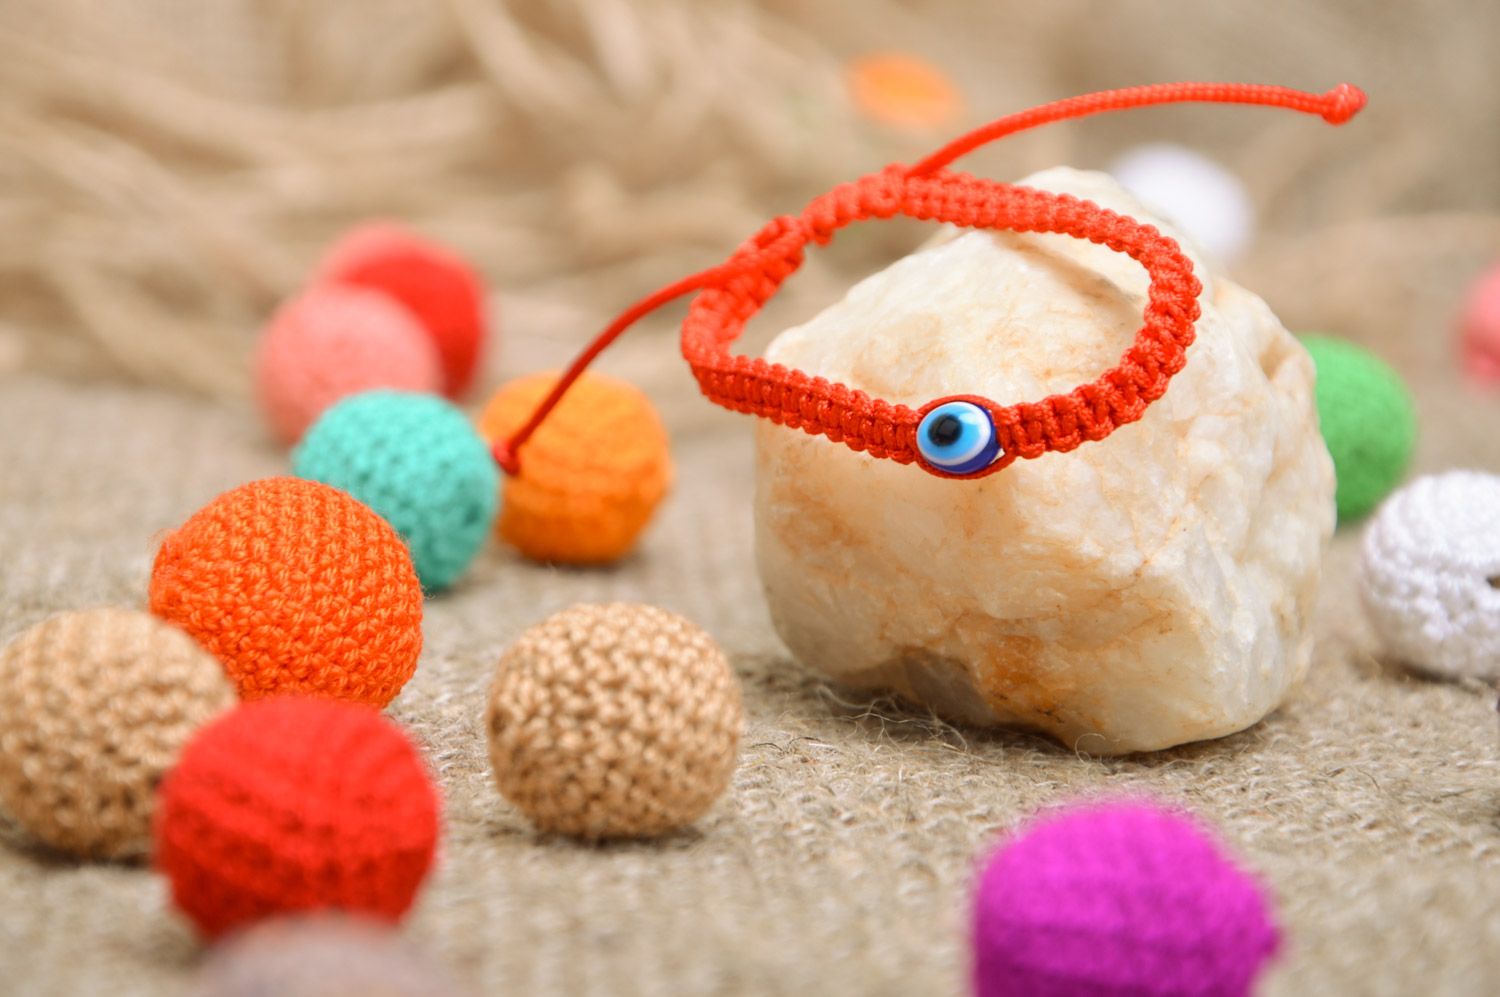 Braided handmade red wrist bracelet made of threads against the evil eye photo 1